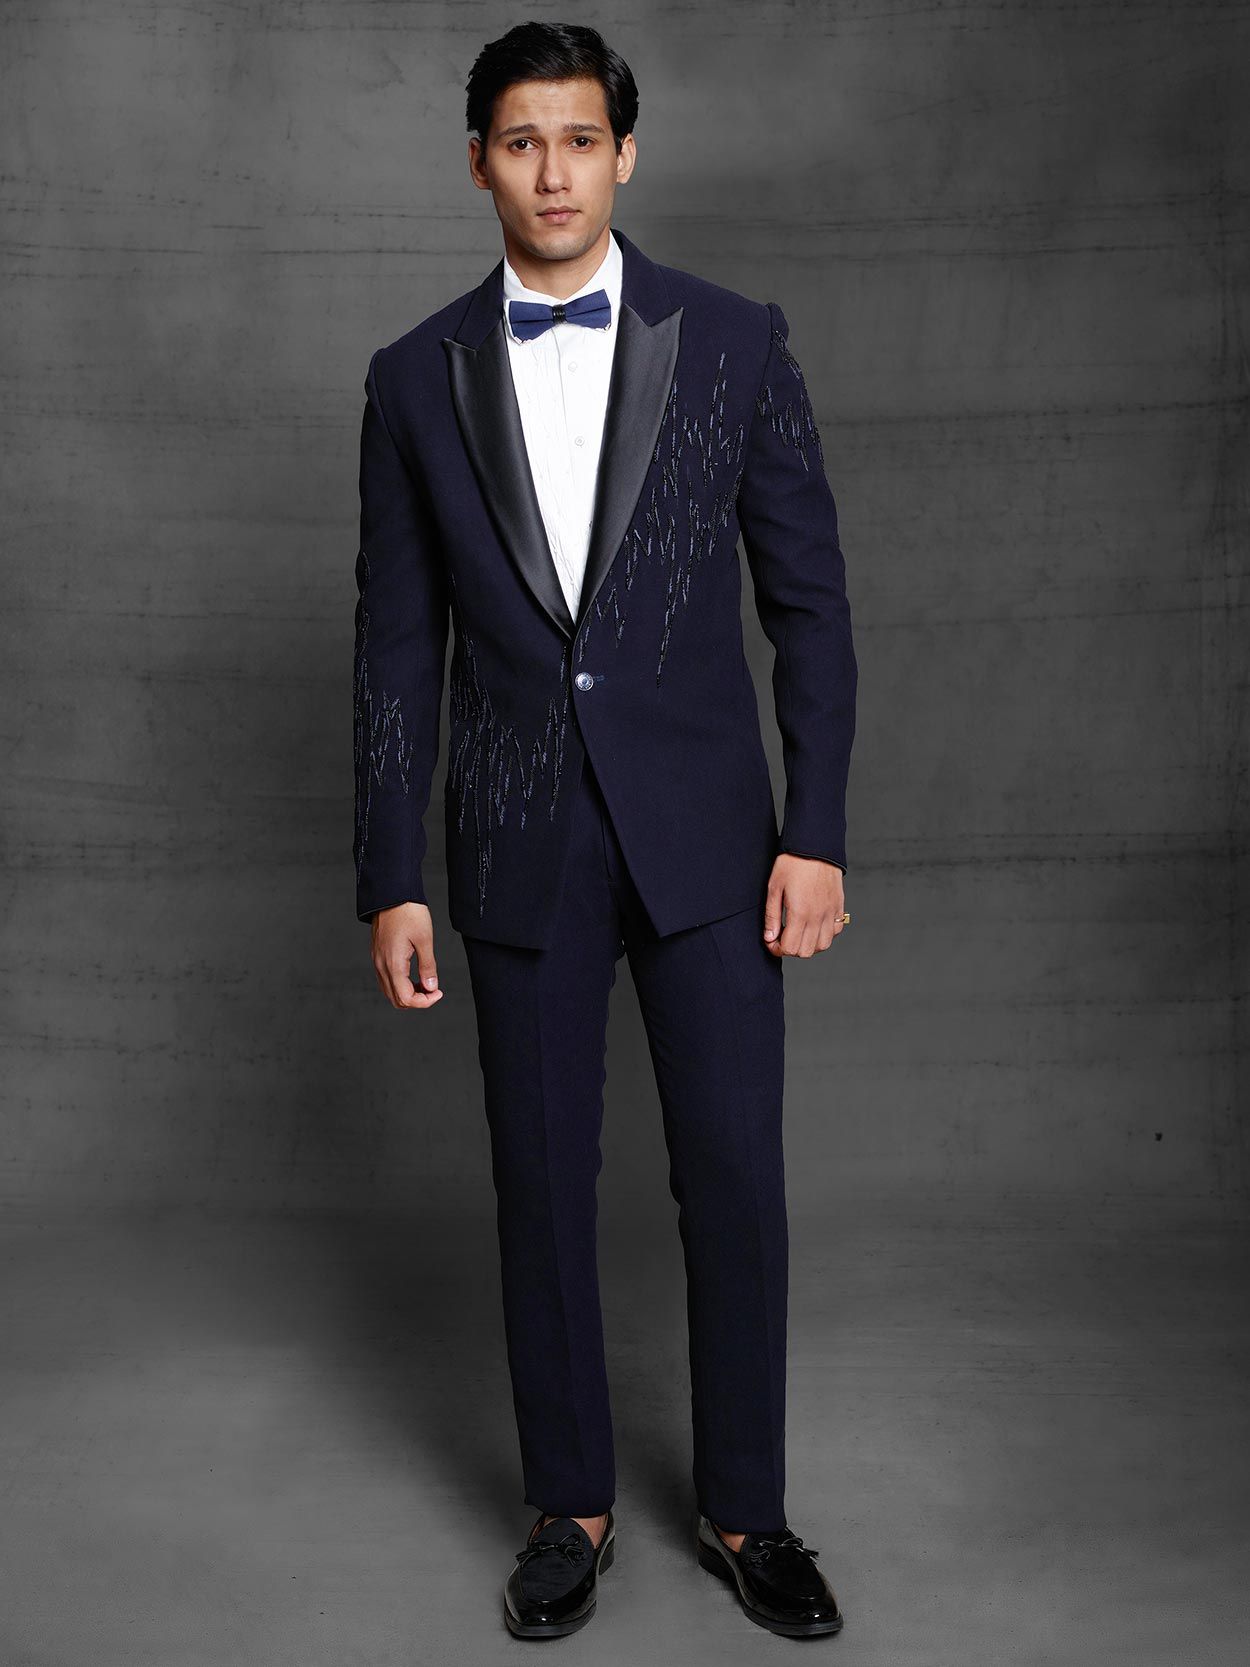 Navy Blue Suit | Men's Wedding Suit Rentals | Generation Tux